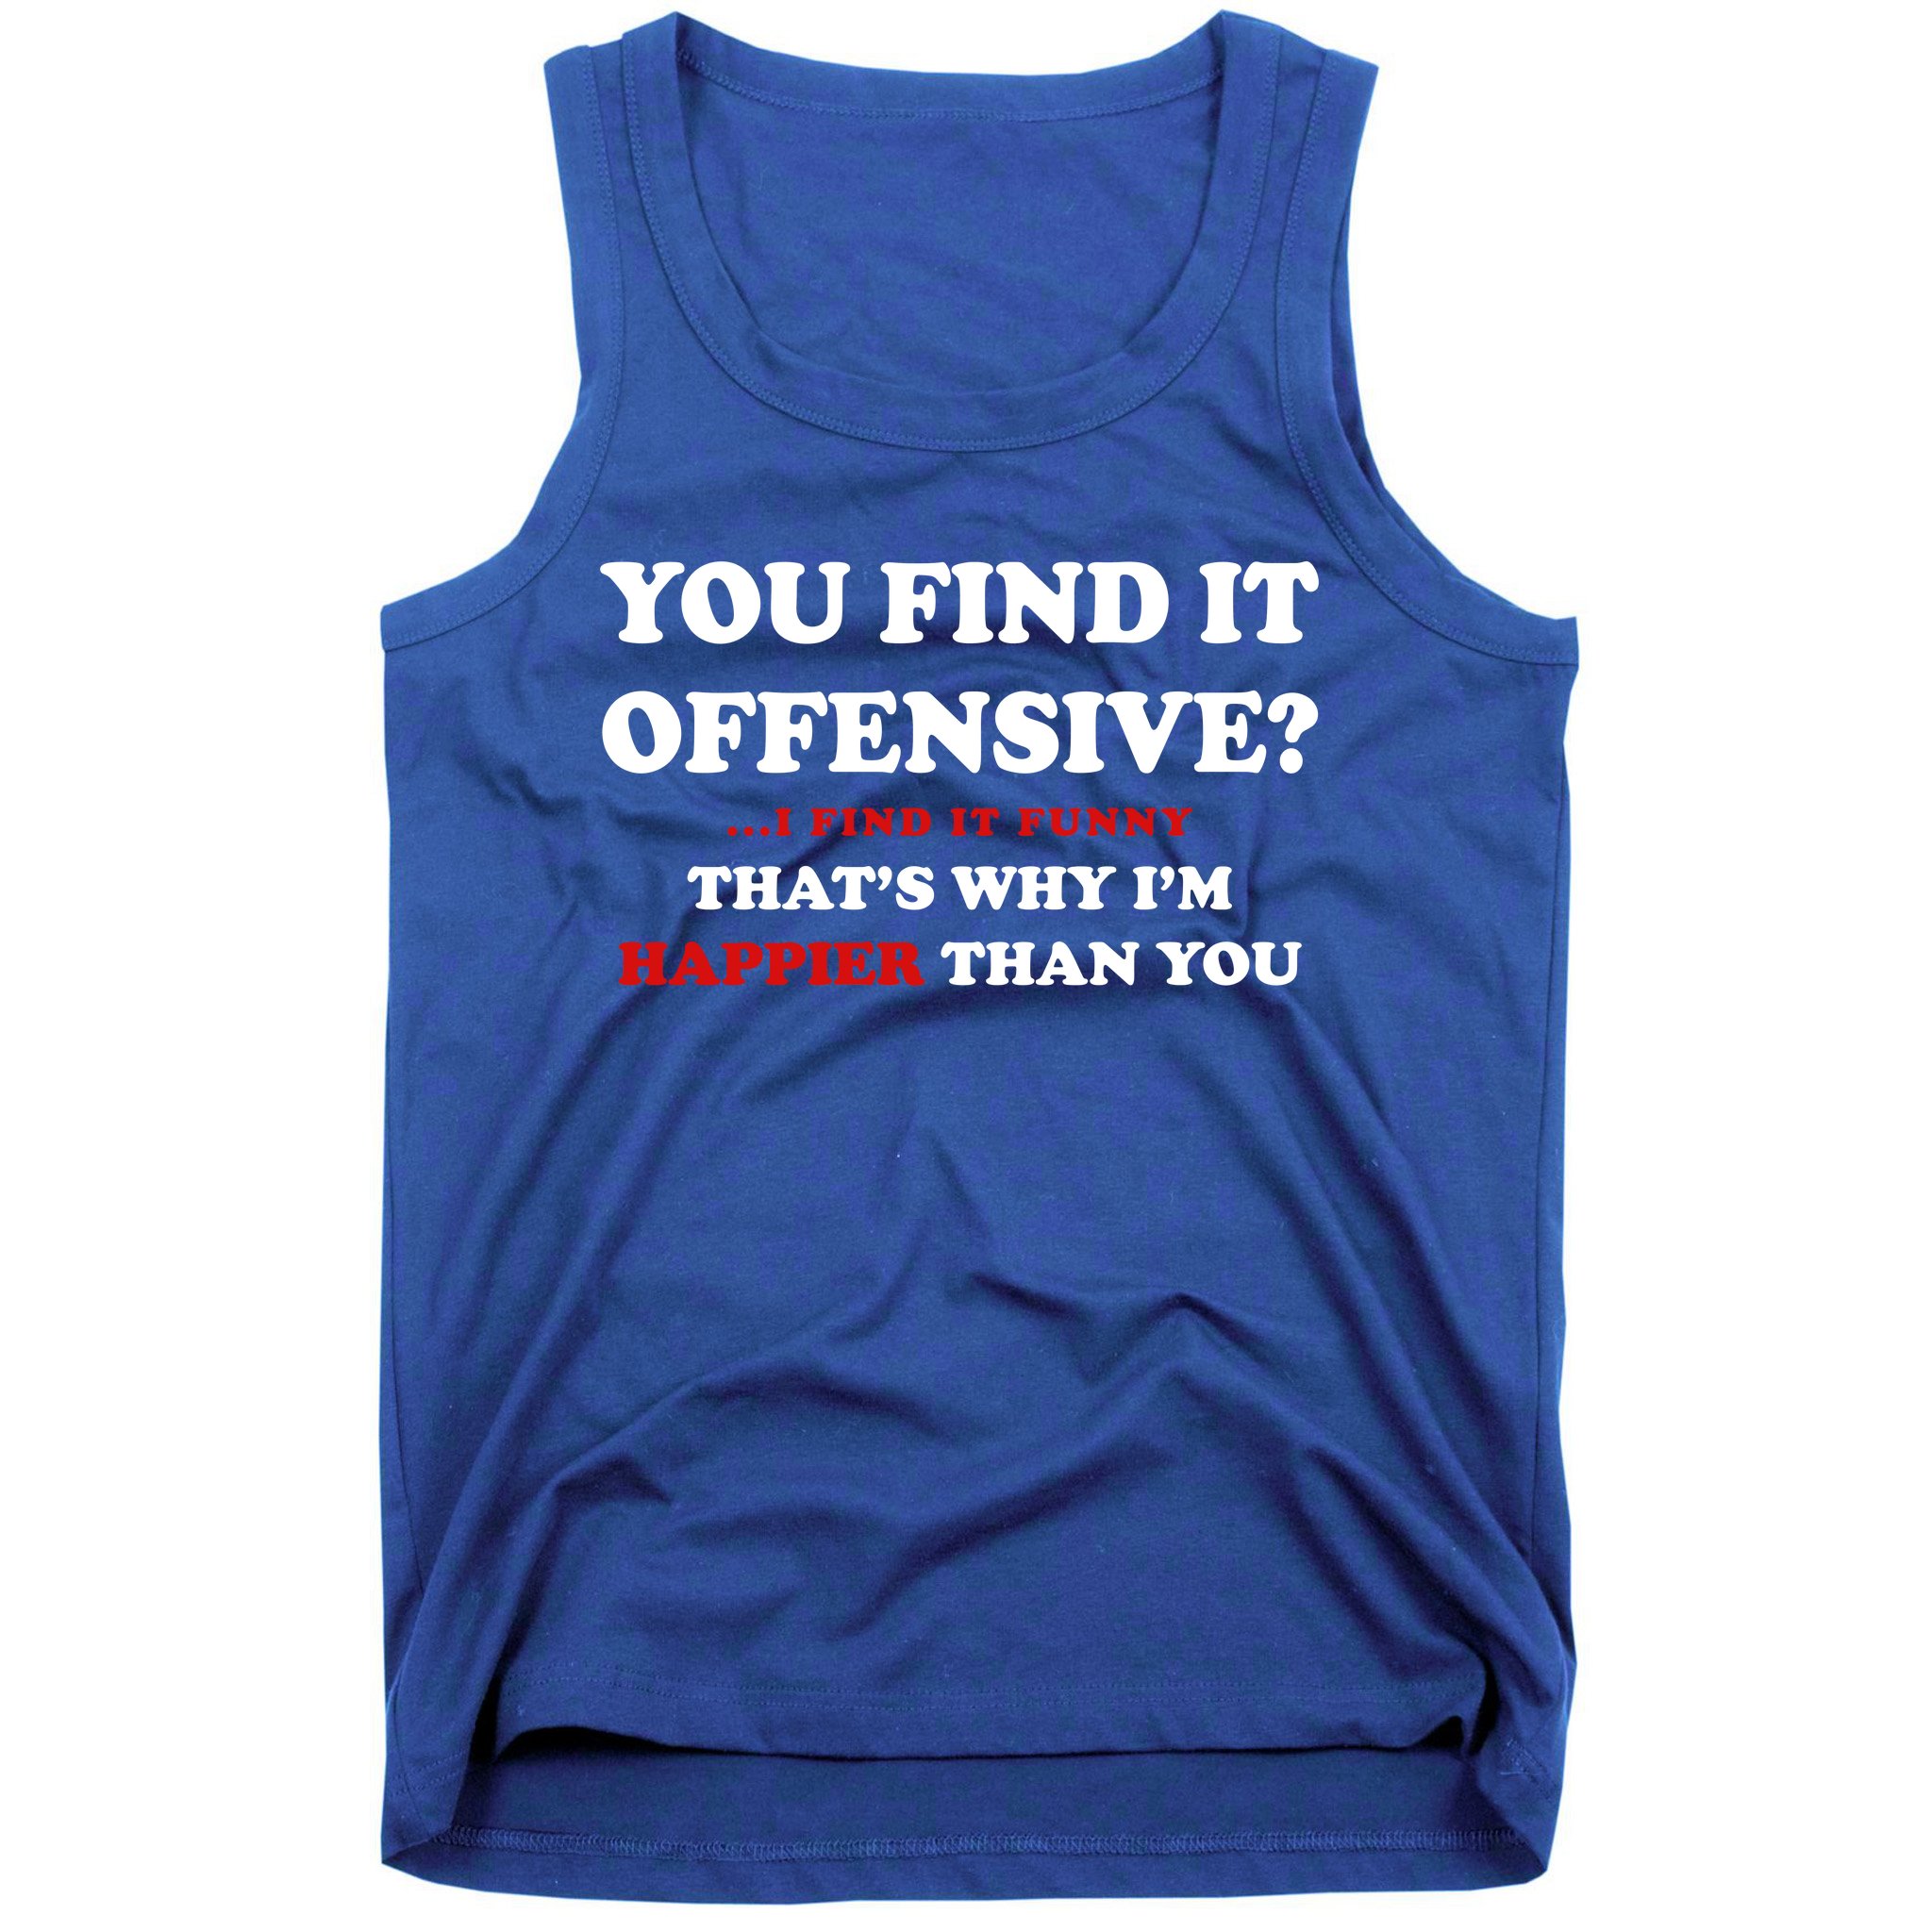 I Like Fishing Funny Comic Offensive Rude Mens T-Shirts Tank Top Vests S-XXL